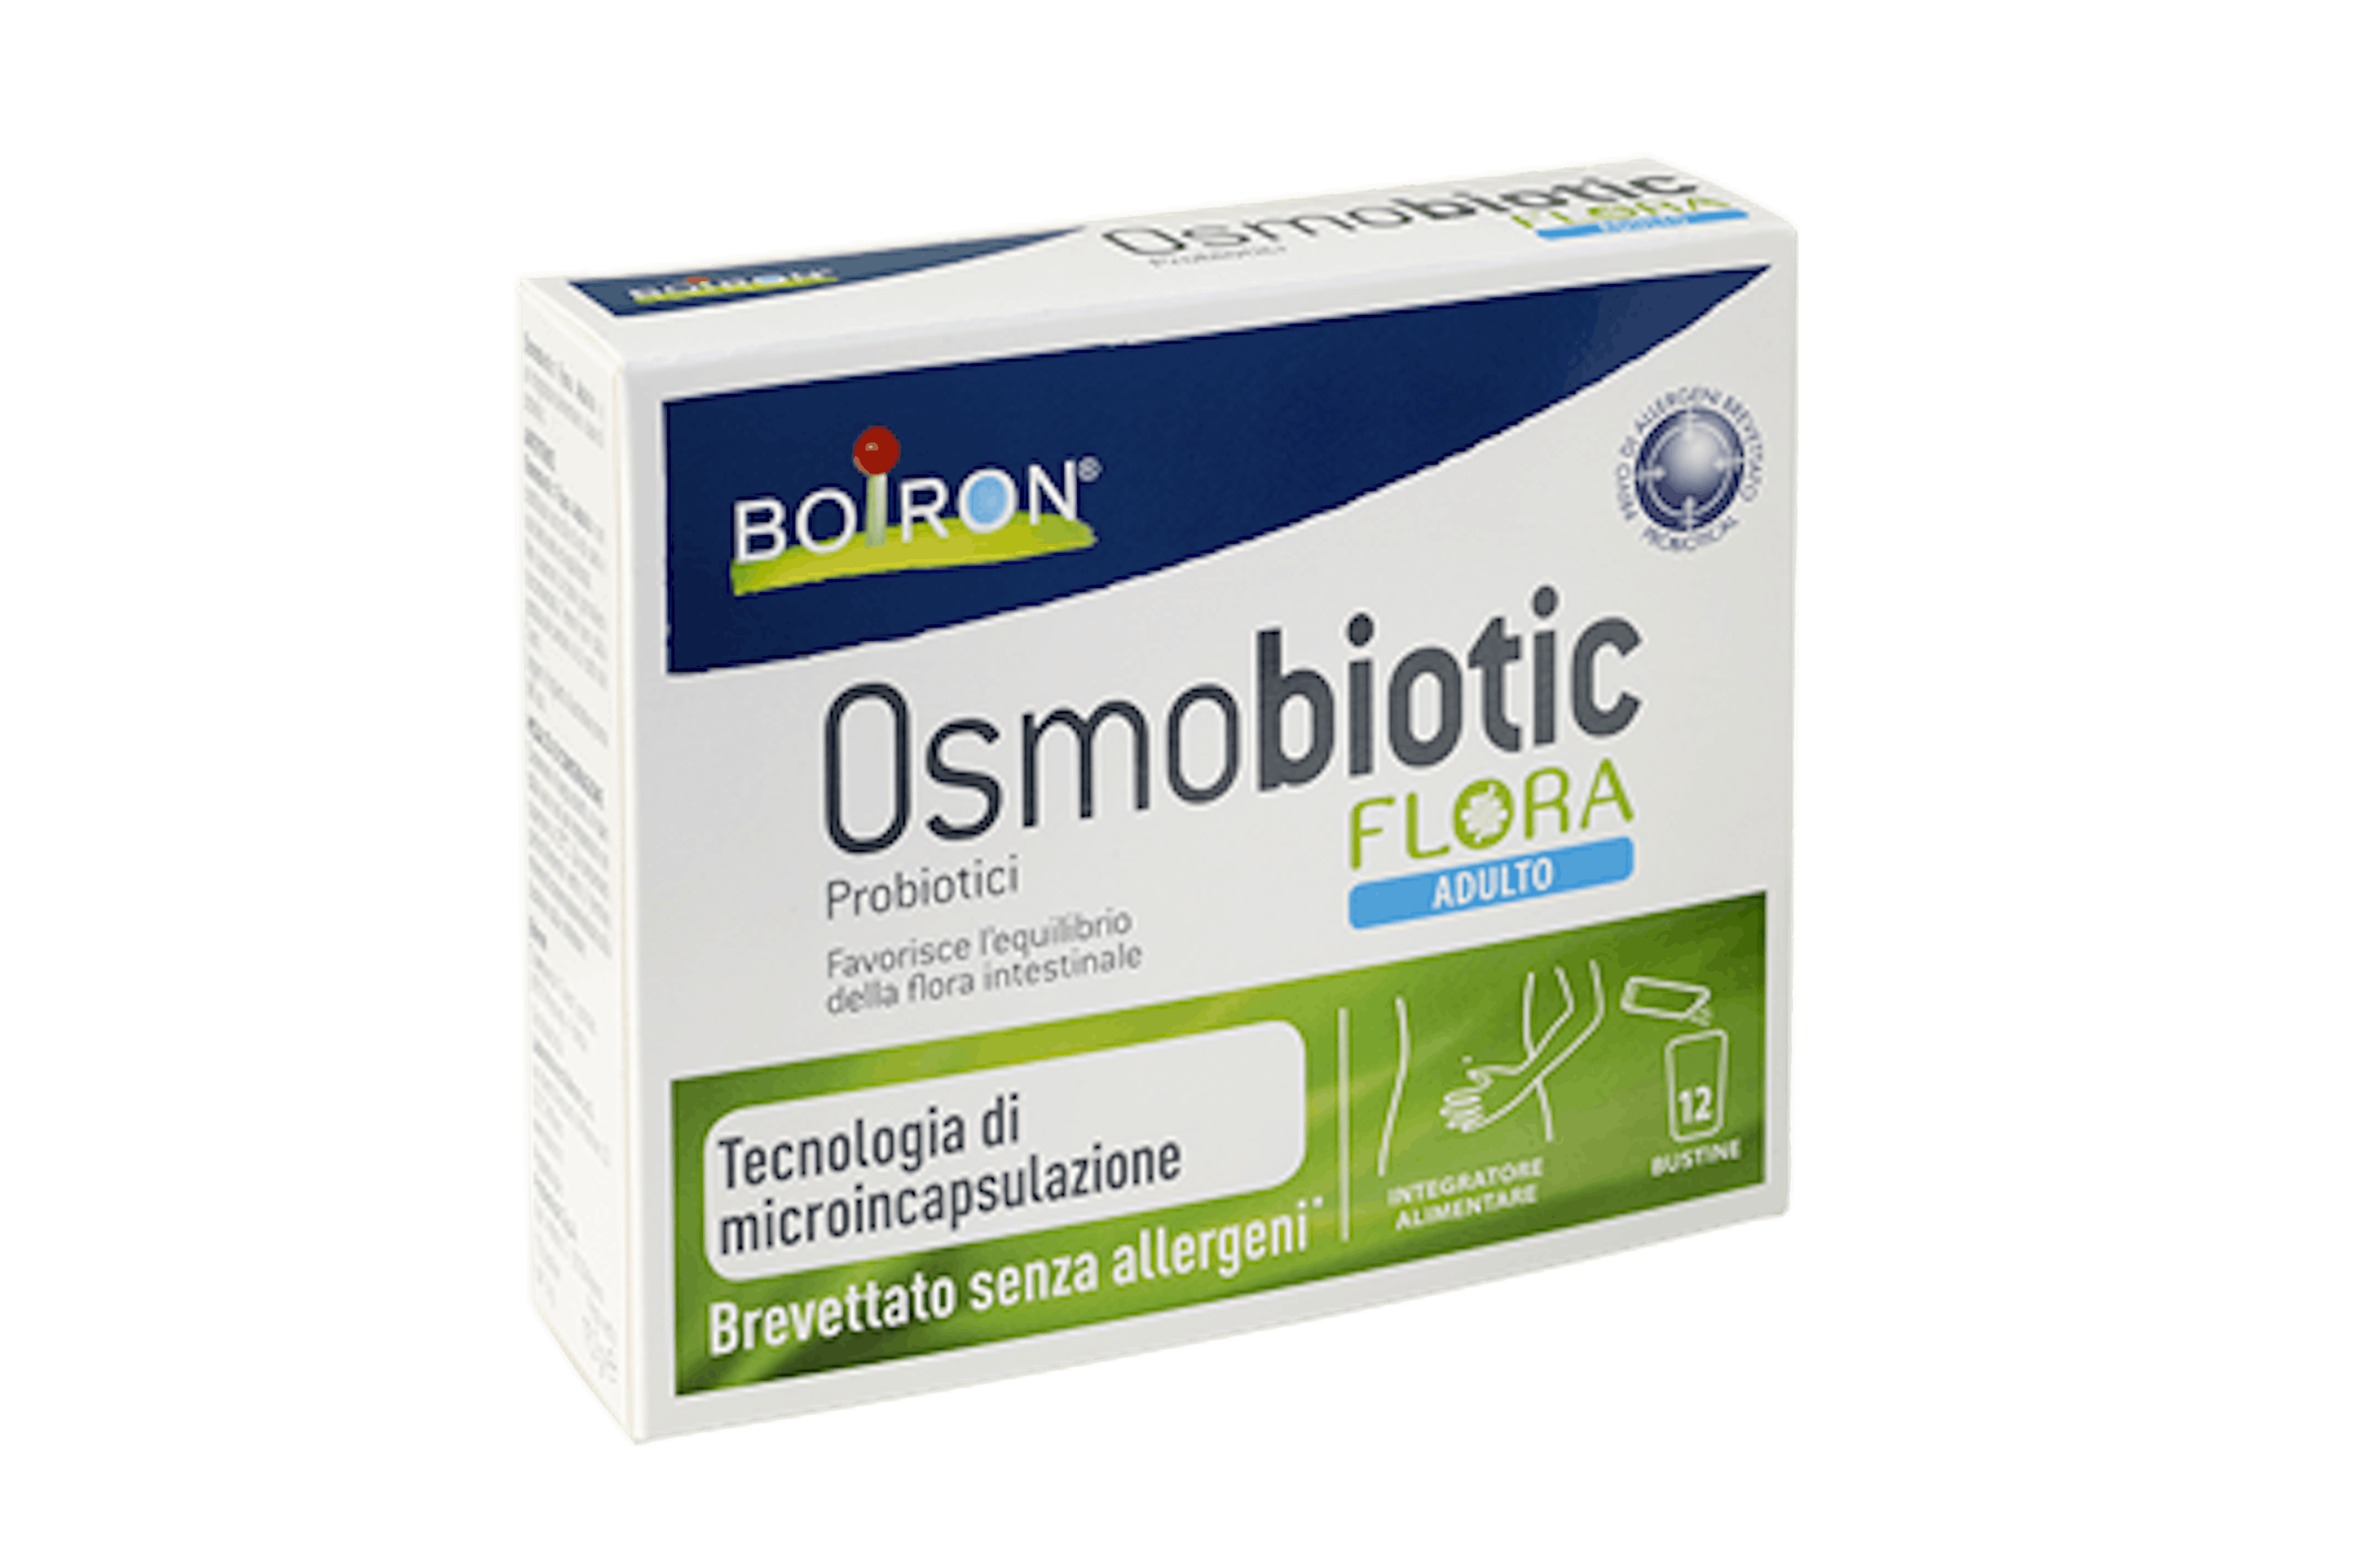 Osmobiotic Flora Probiotico ADULTO